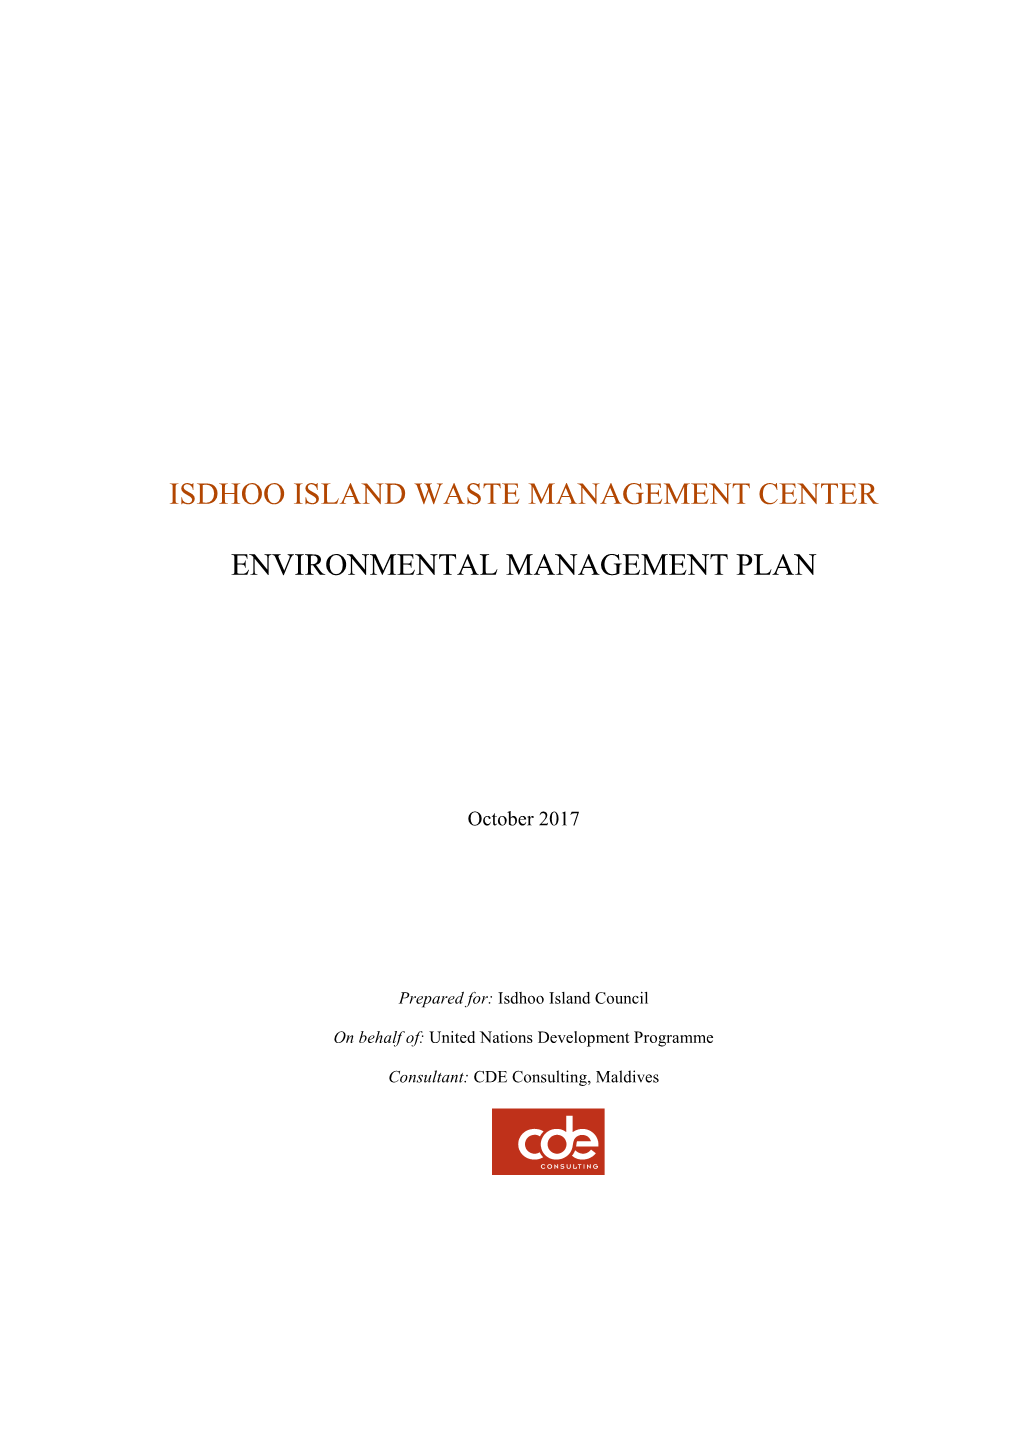 Isdhoo Island Waste Management Center